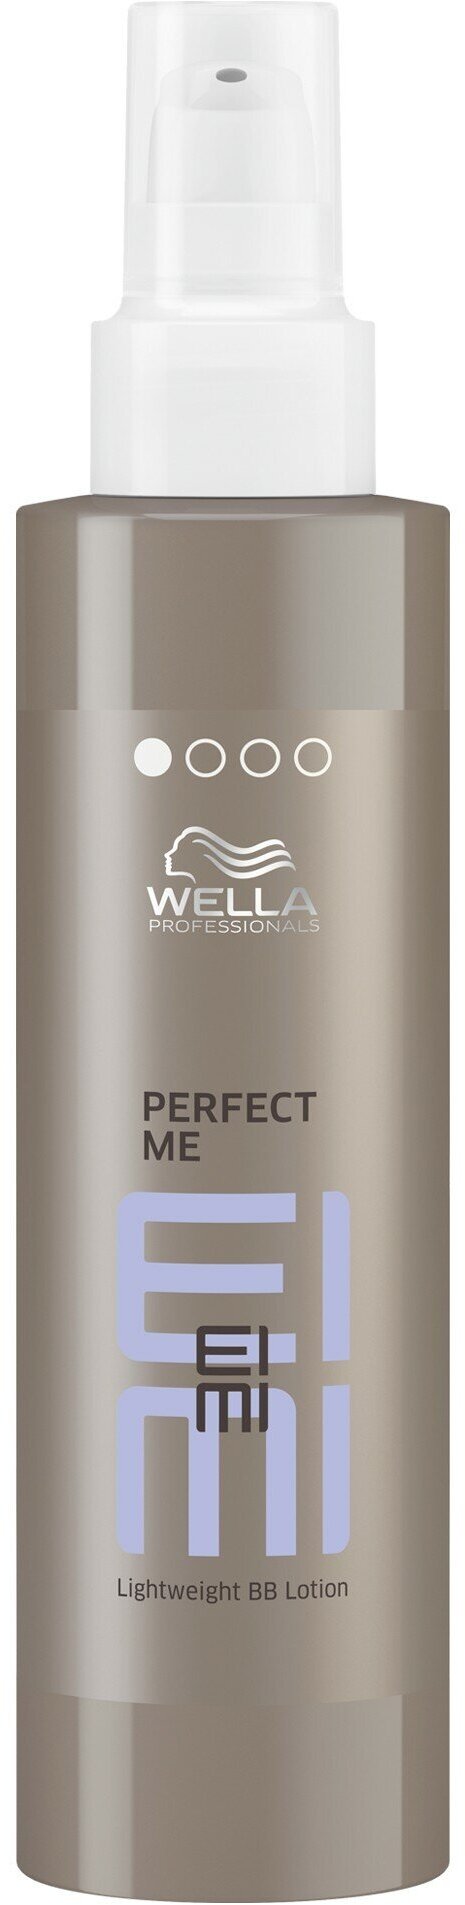 Wella Professionals / Легкий BB-лосьон для волос EIMI PERFECT ME, 100мл